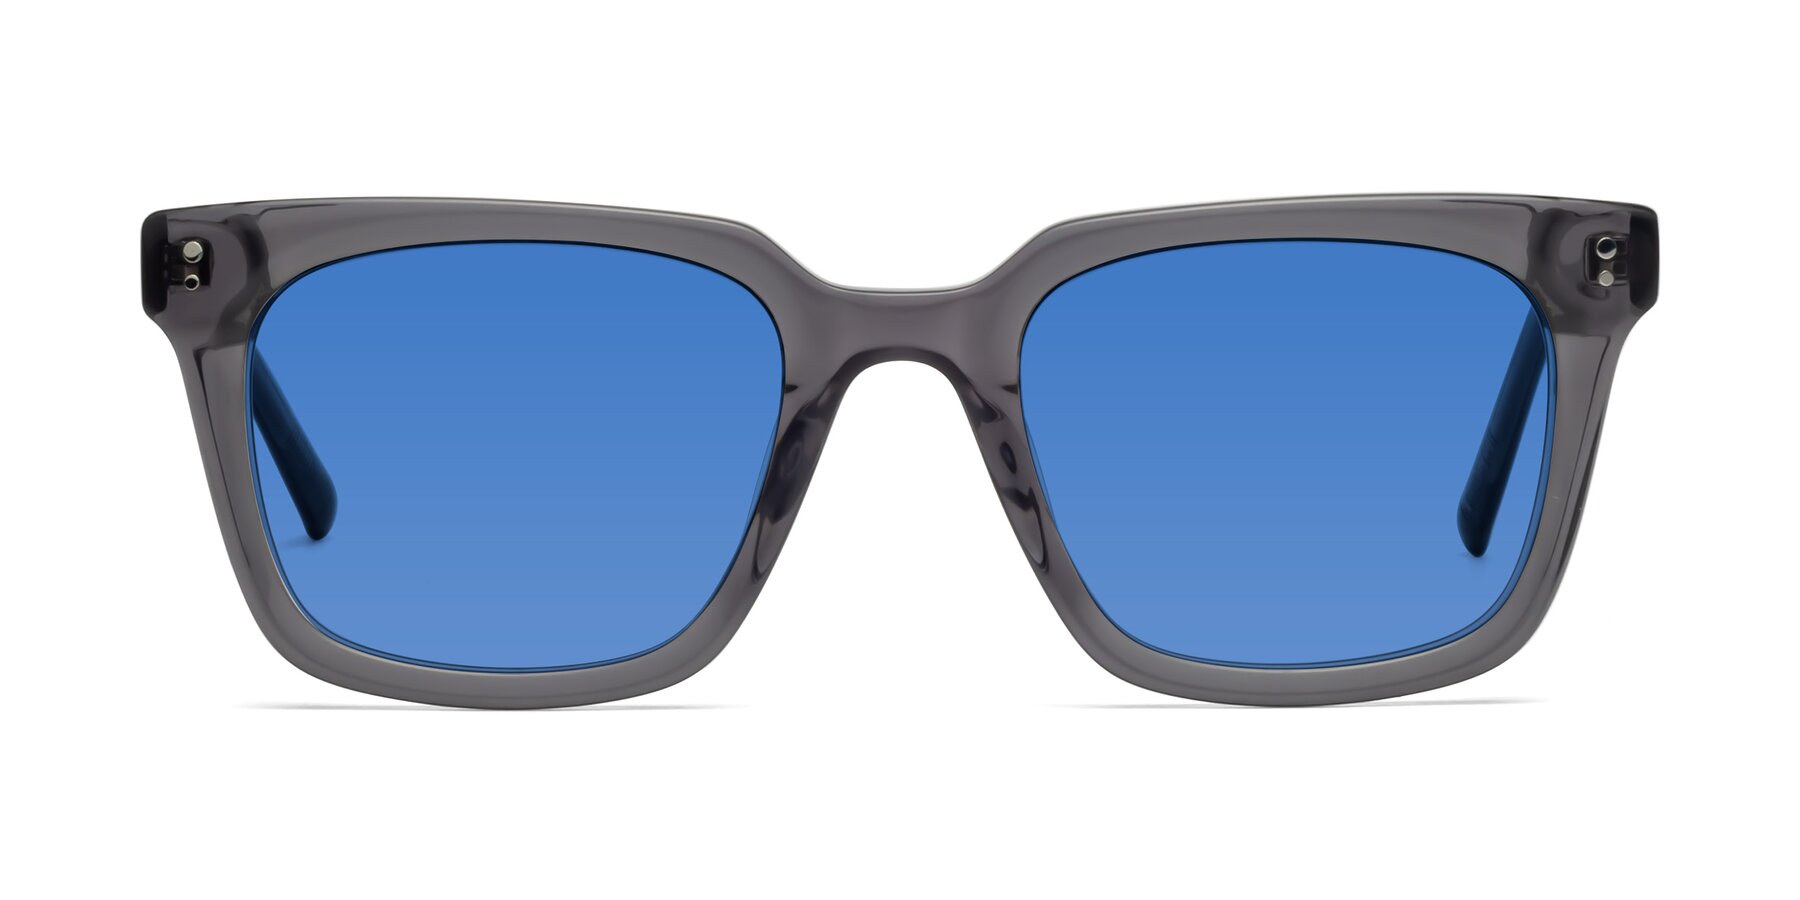 Clark - Gray Sunglasses